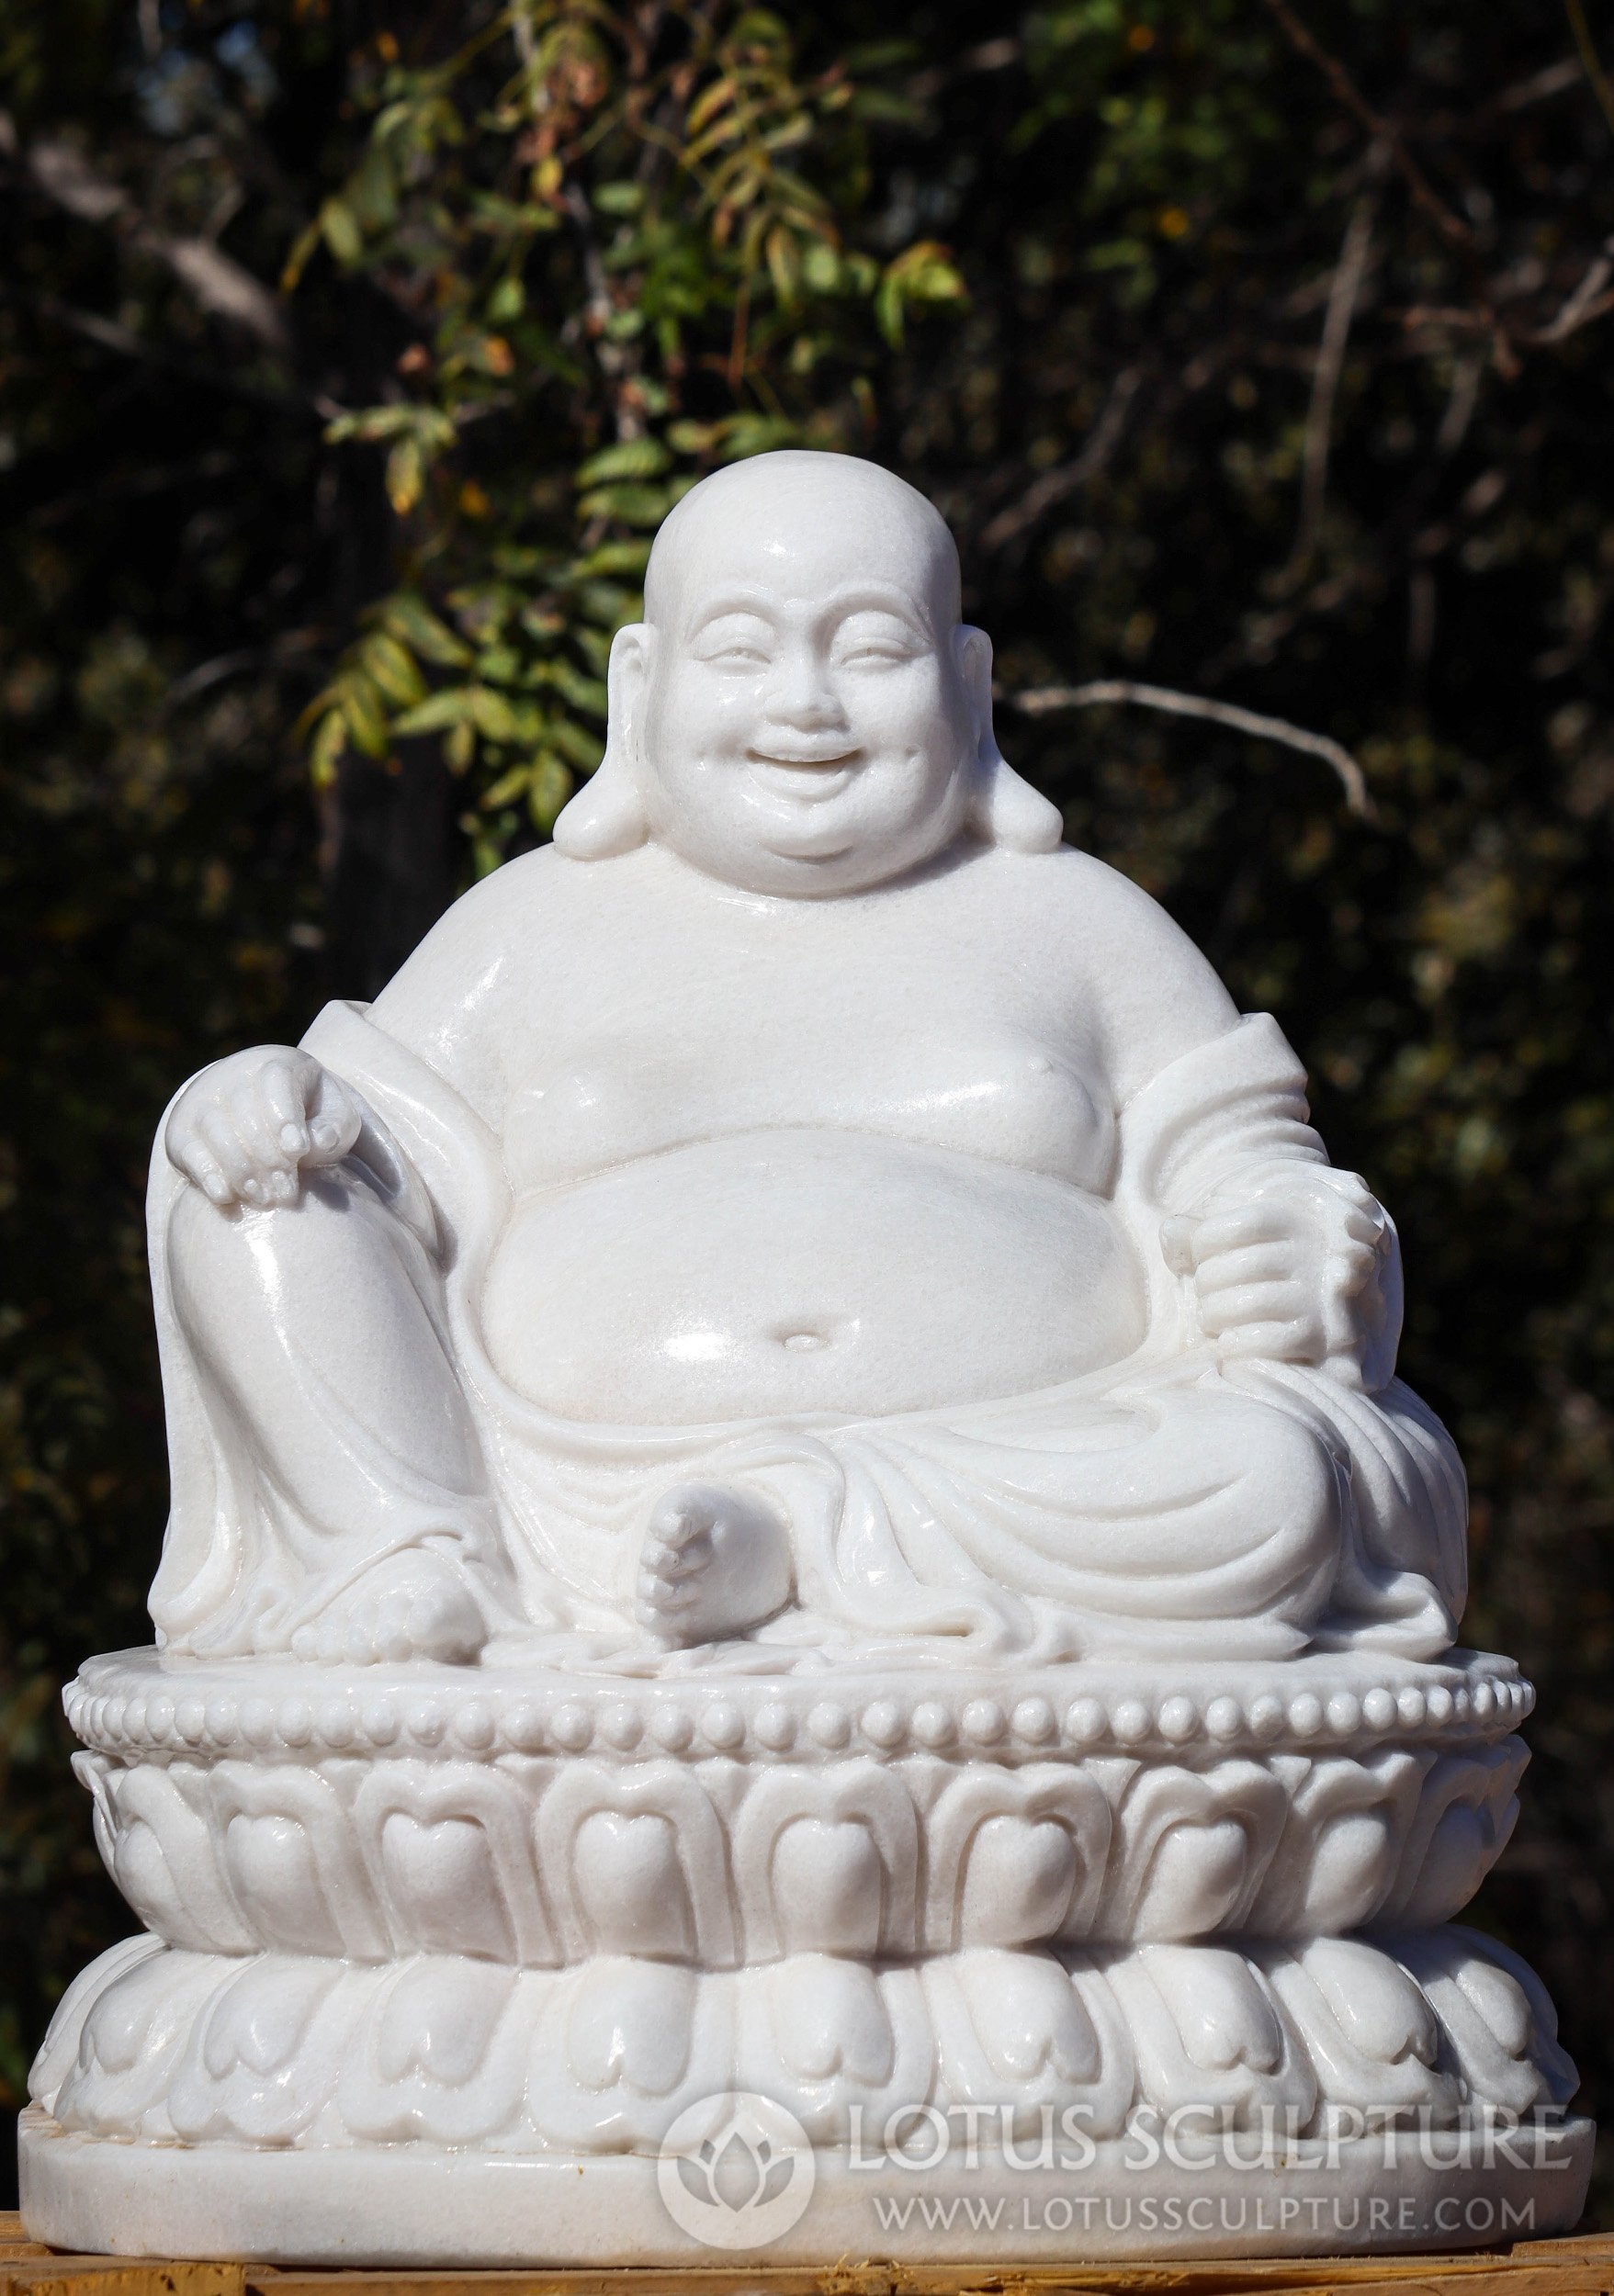 Laughing Buddha: Spreading good cheer, world over | Hyderabad News | The  Hindu